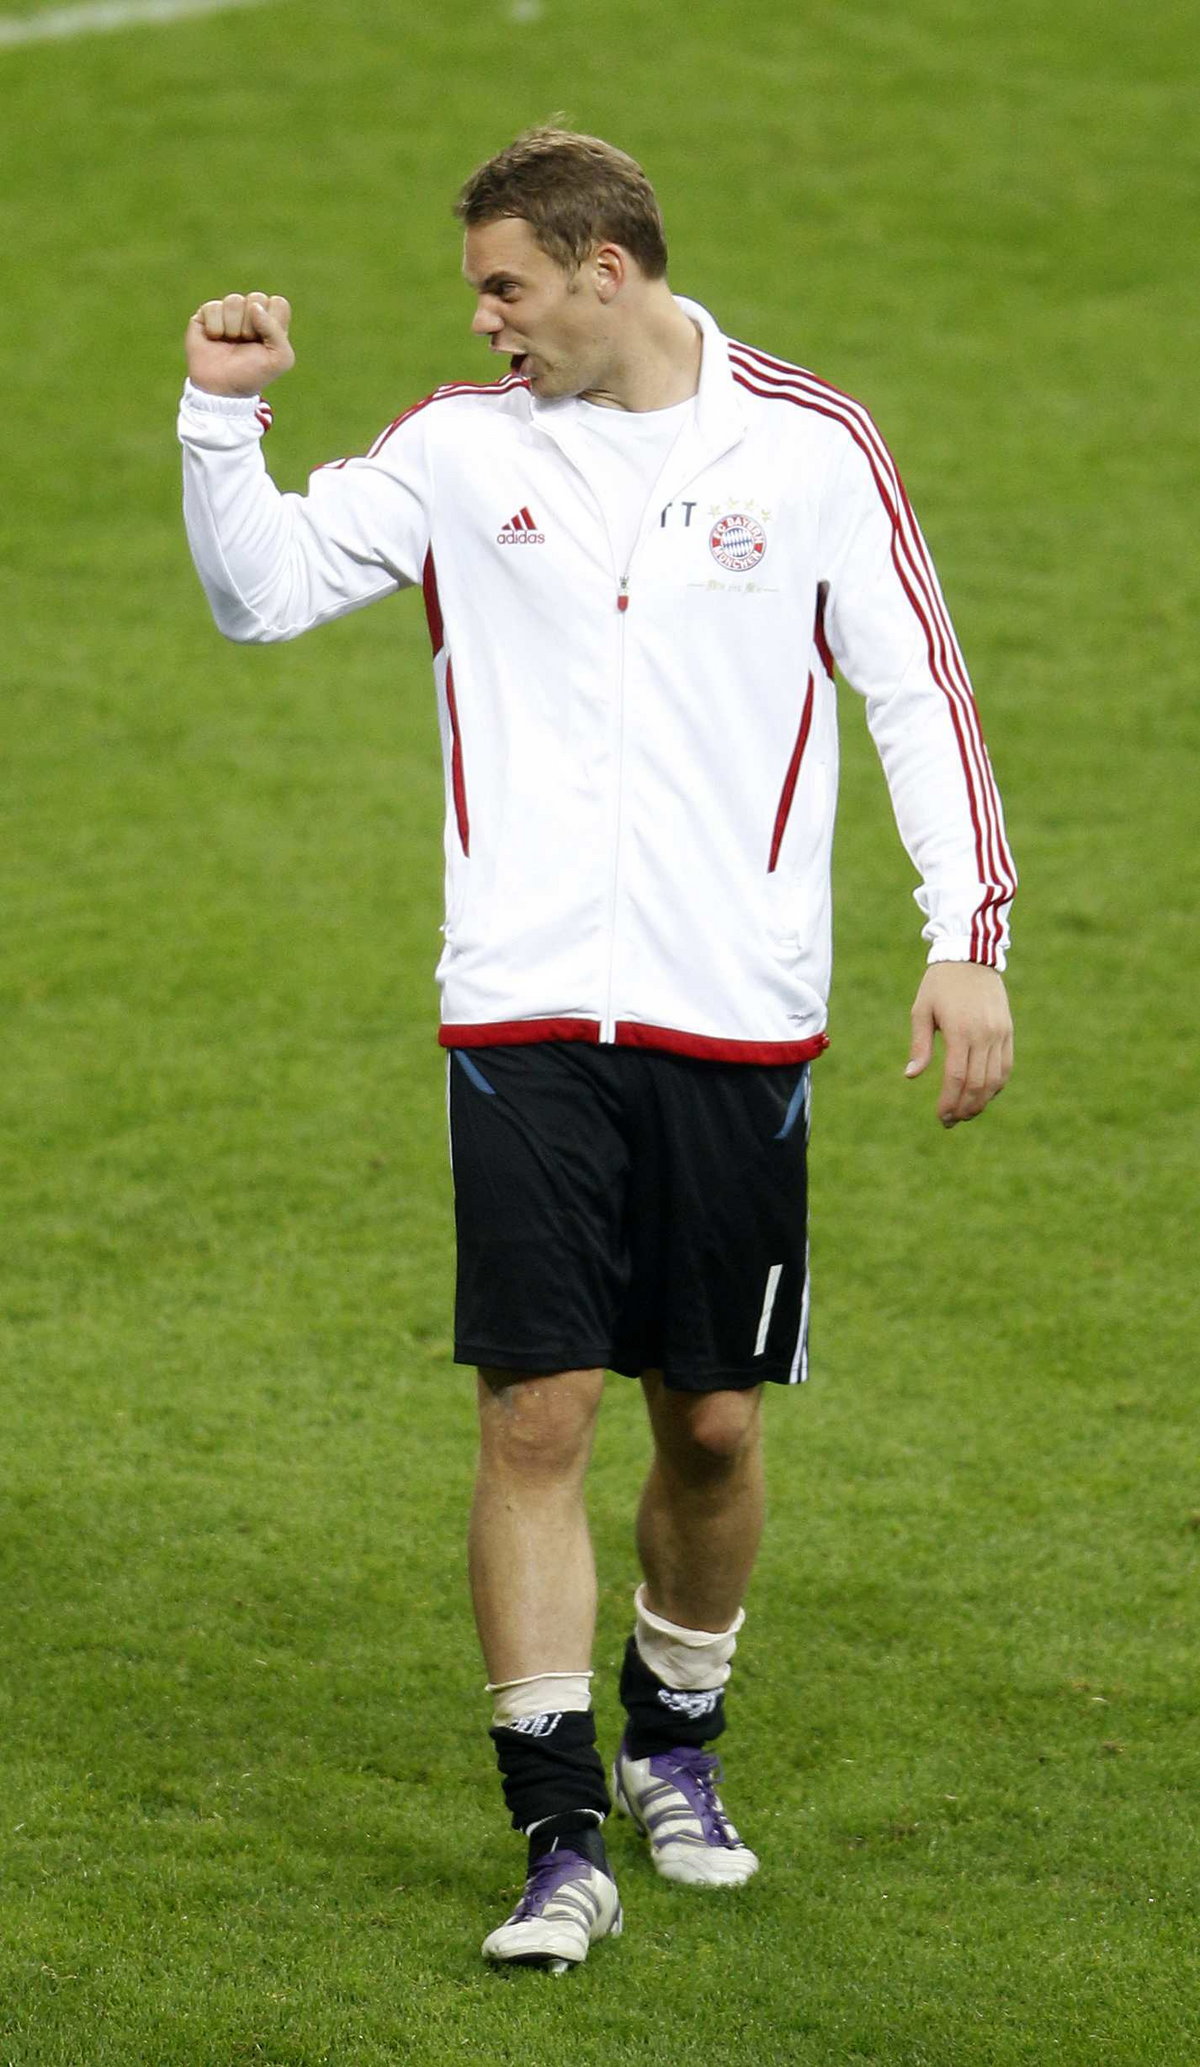 Manuel Neuer